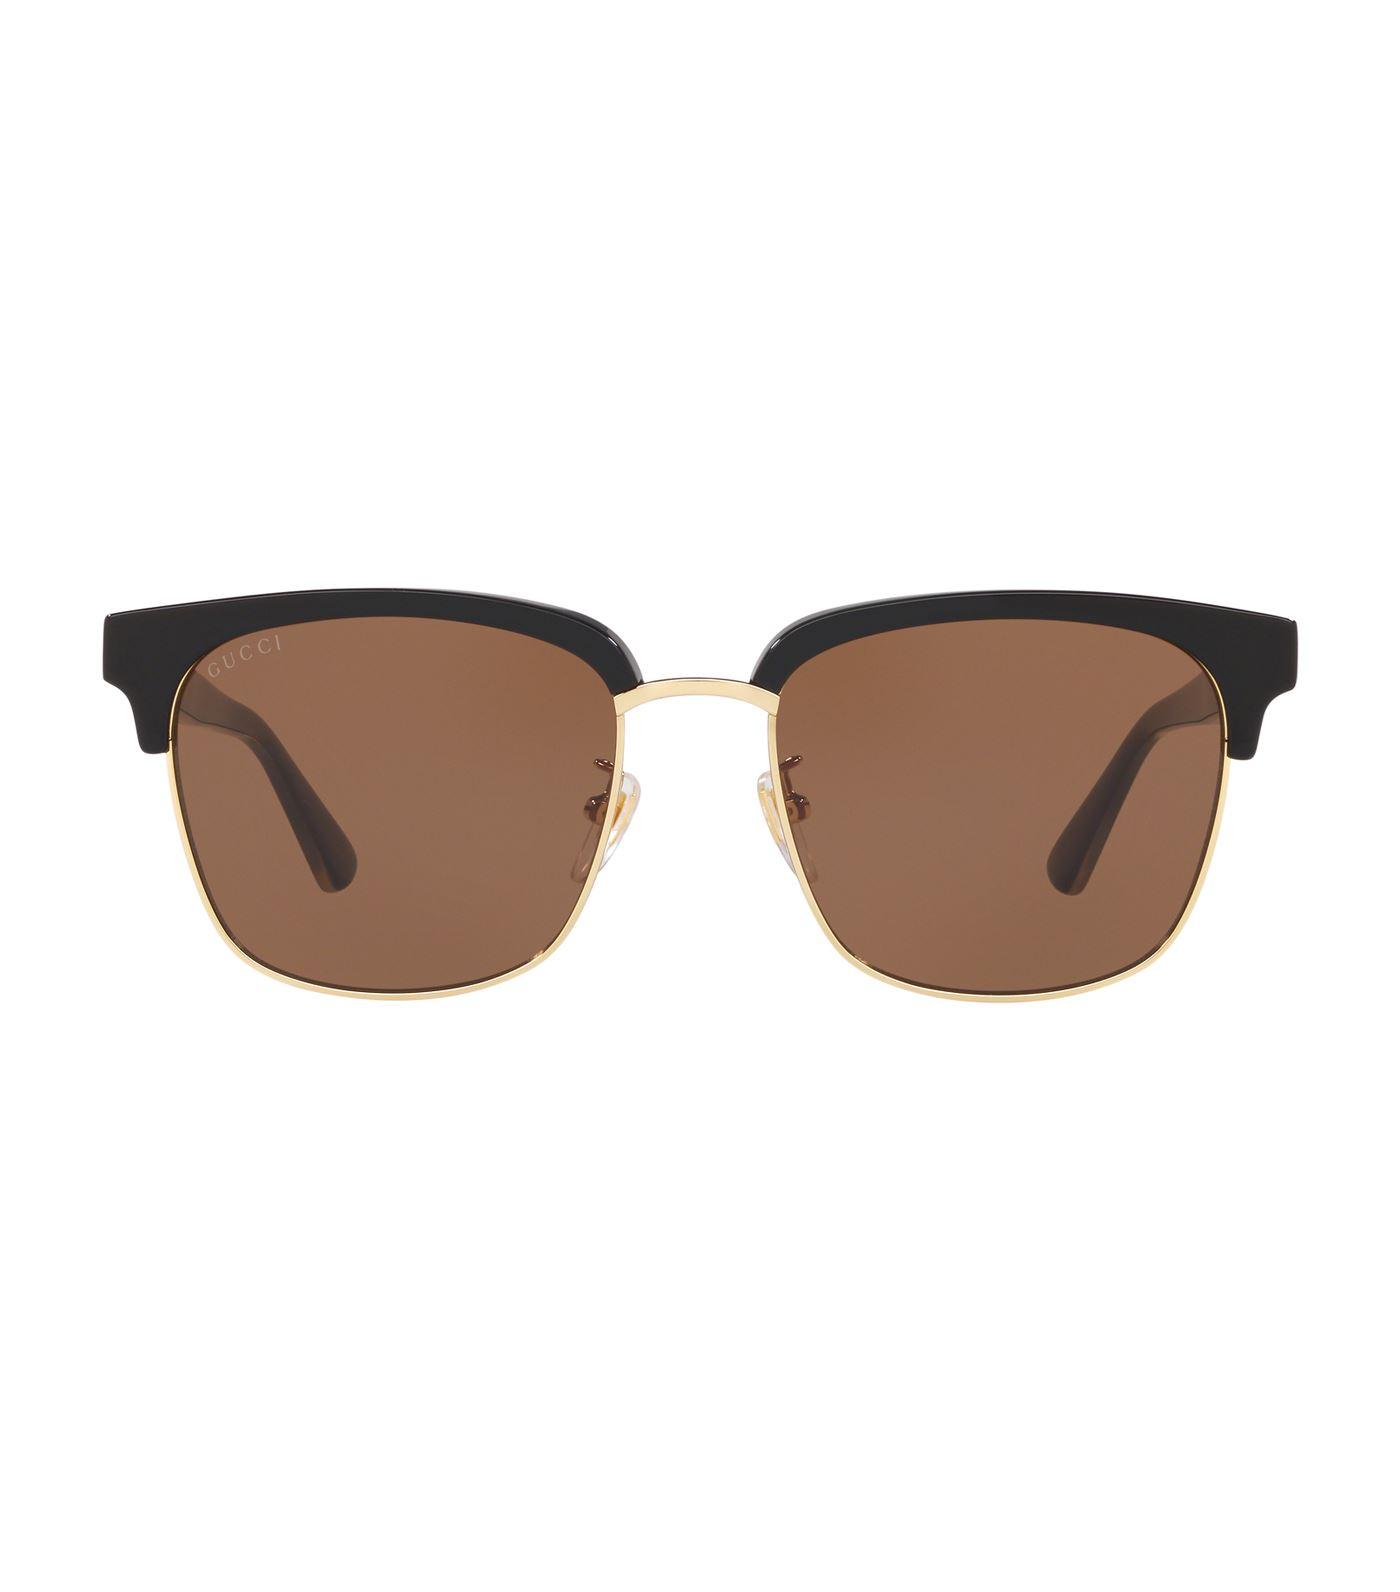 Gucci Rectangular Sunglasses in Black - Lyst